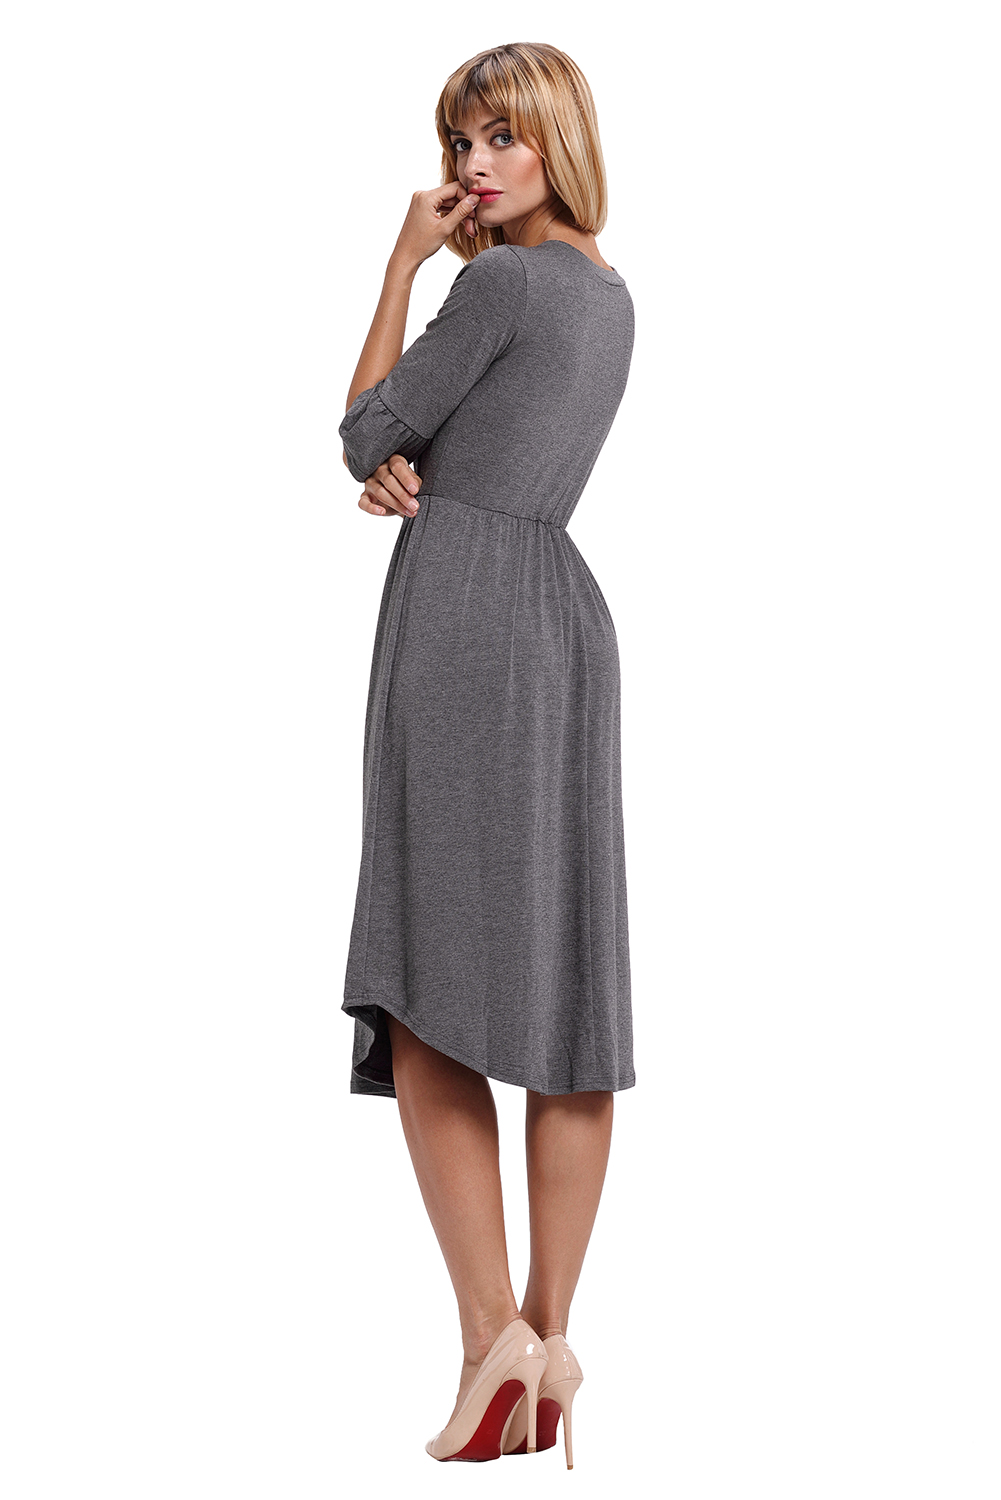 BY61652-11 Gray Ruffle Sleeve Midi Jersey Dress